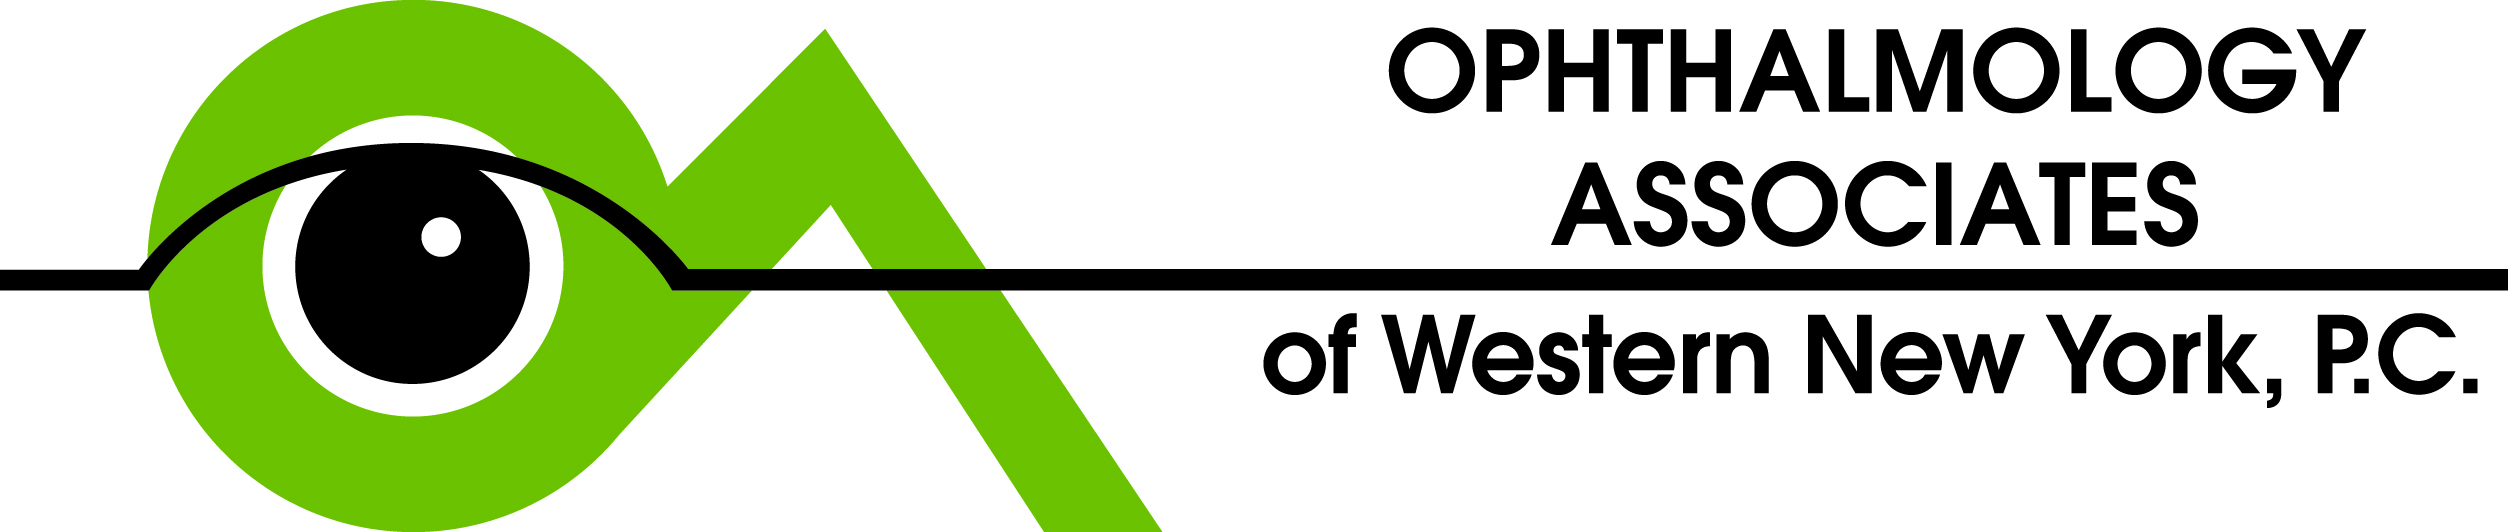 Ophthalmology Associates of Western New York